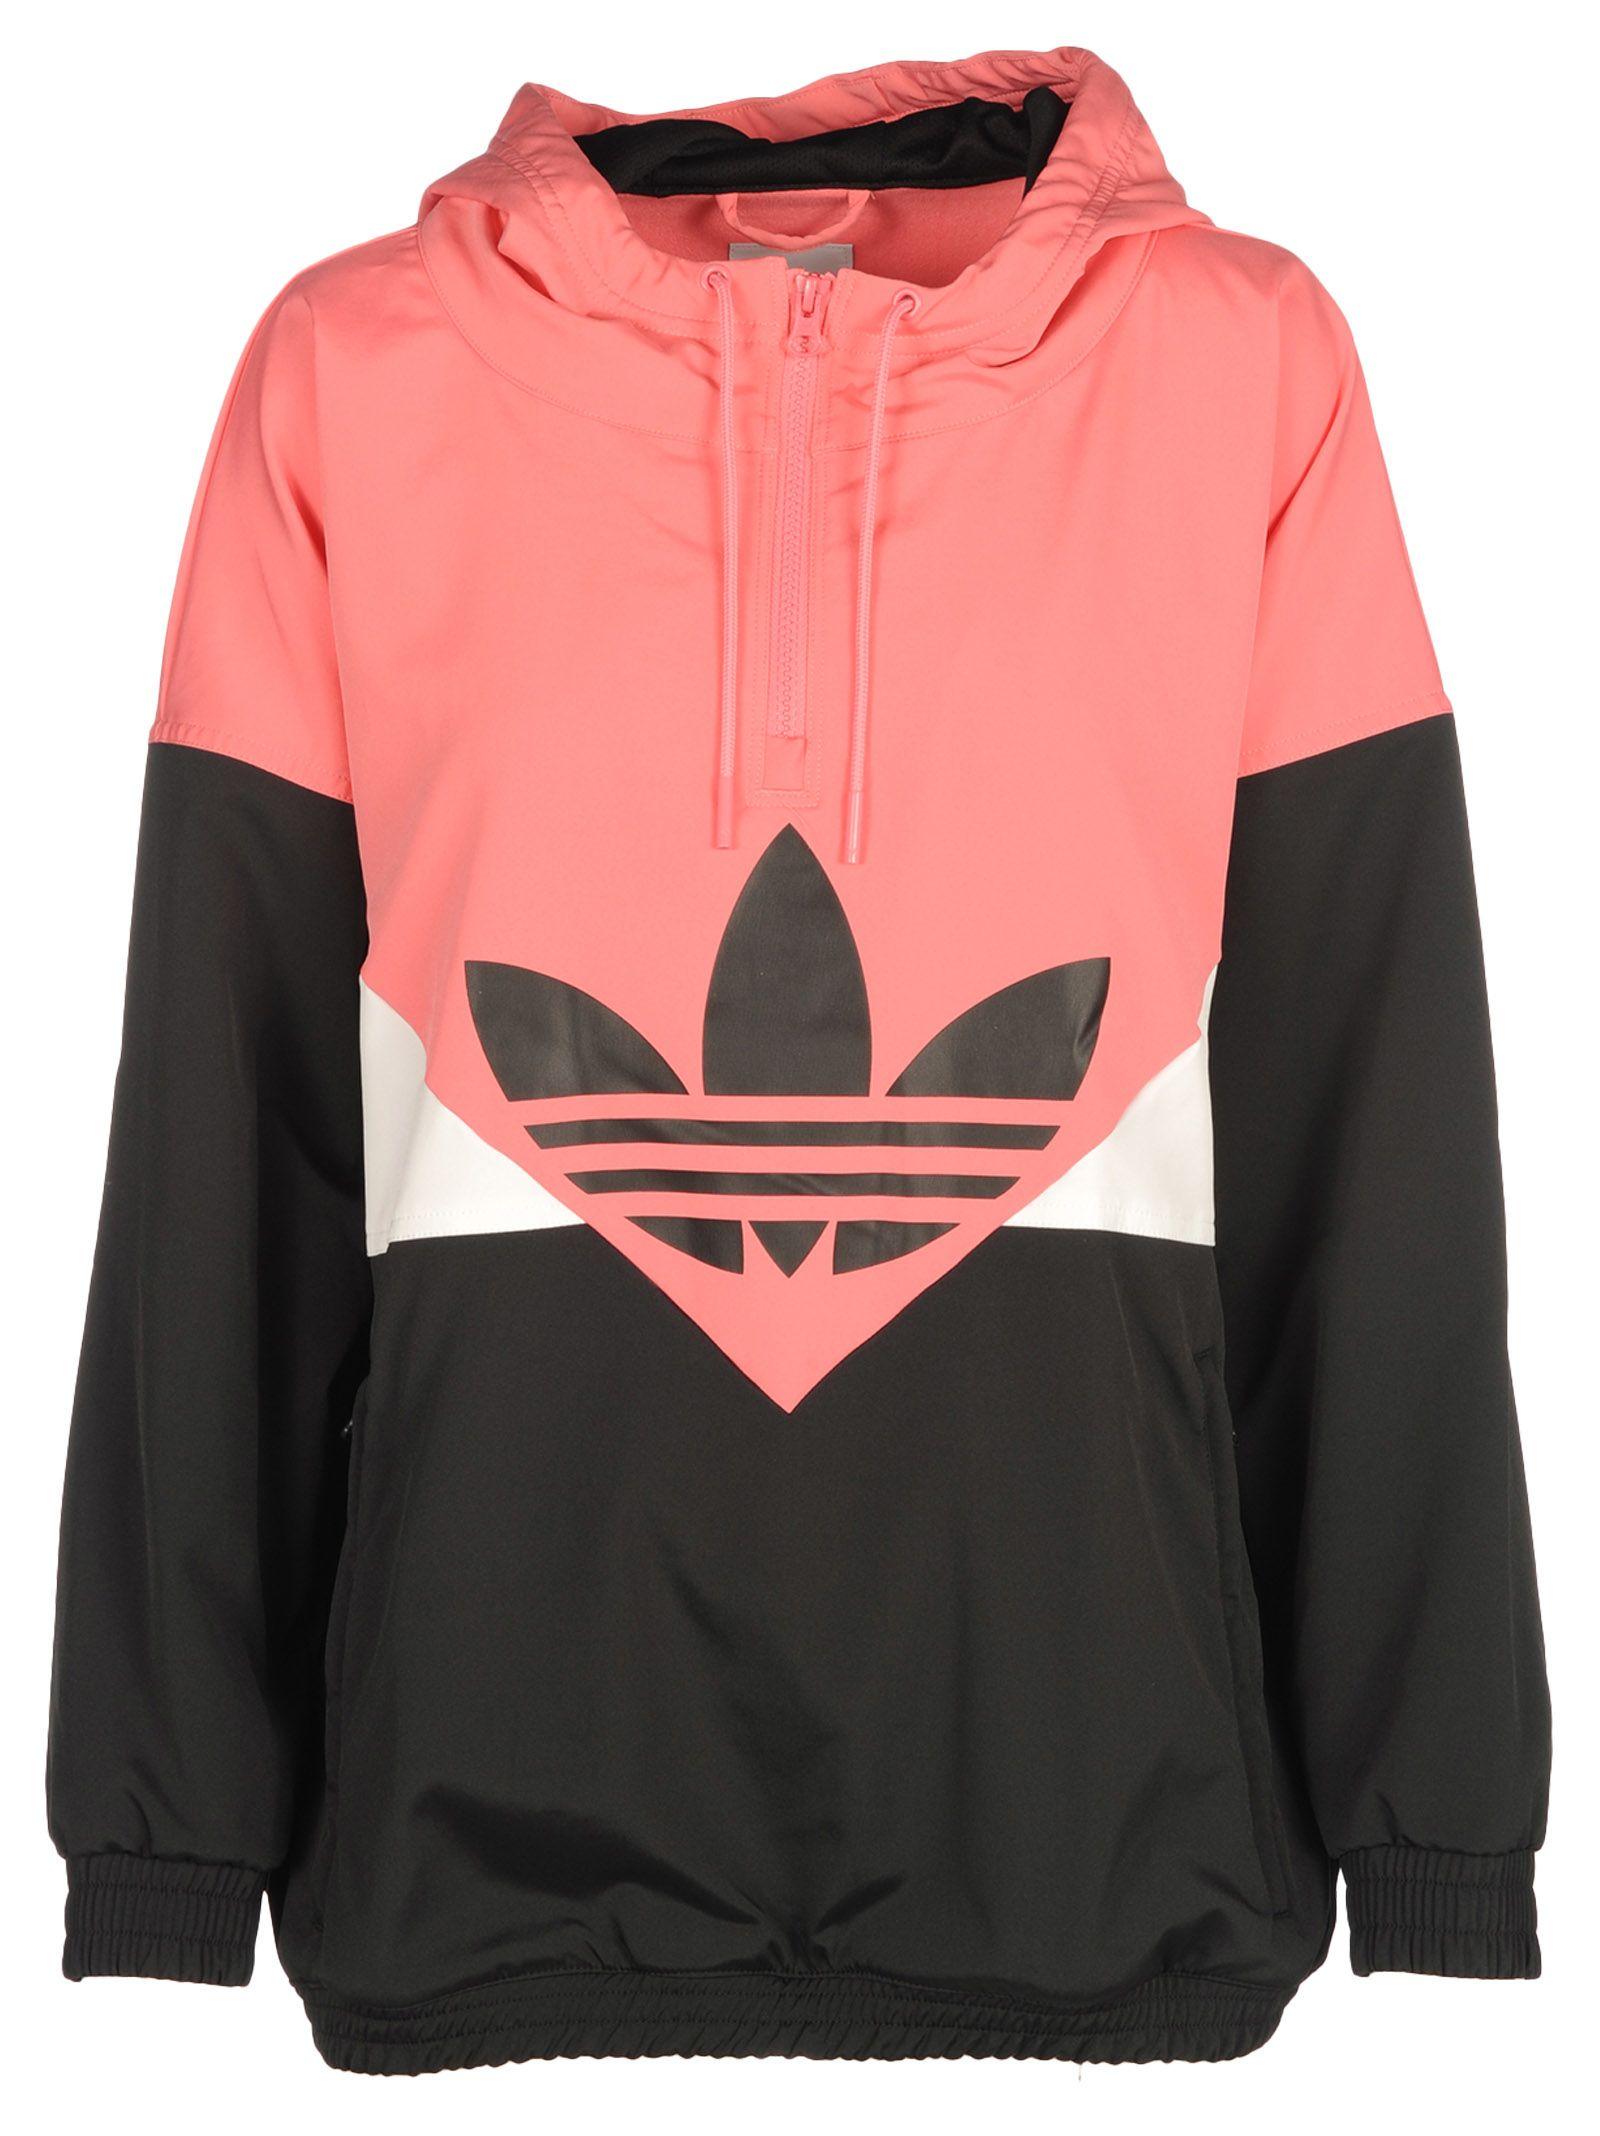 black and pink adidas jacket